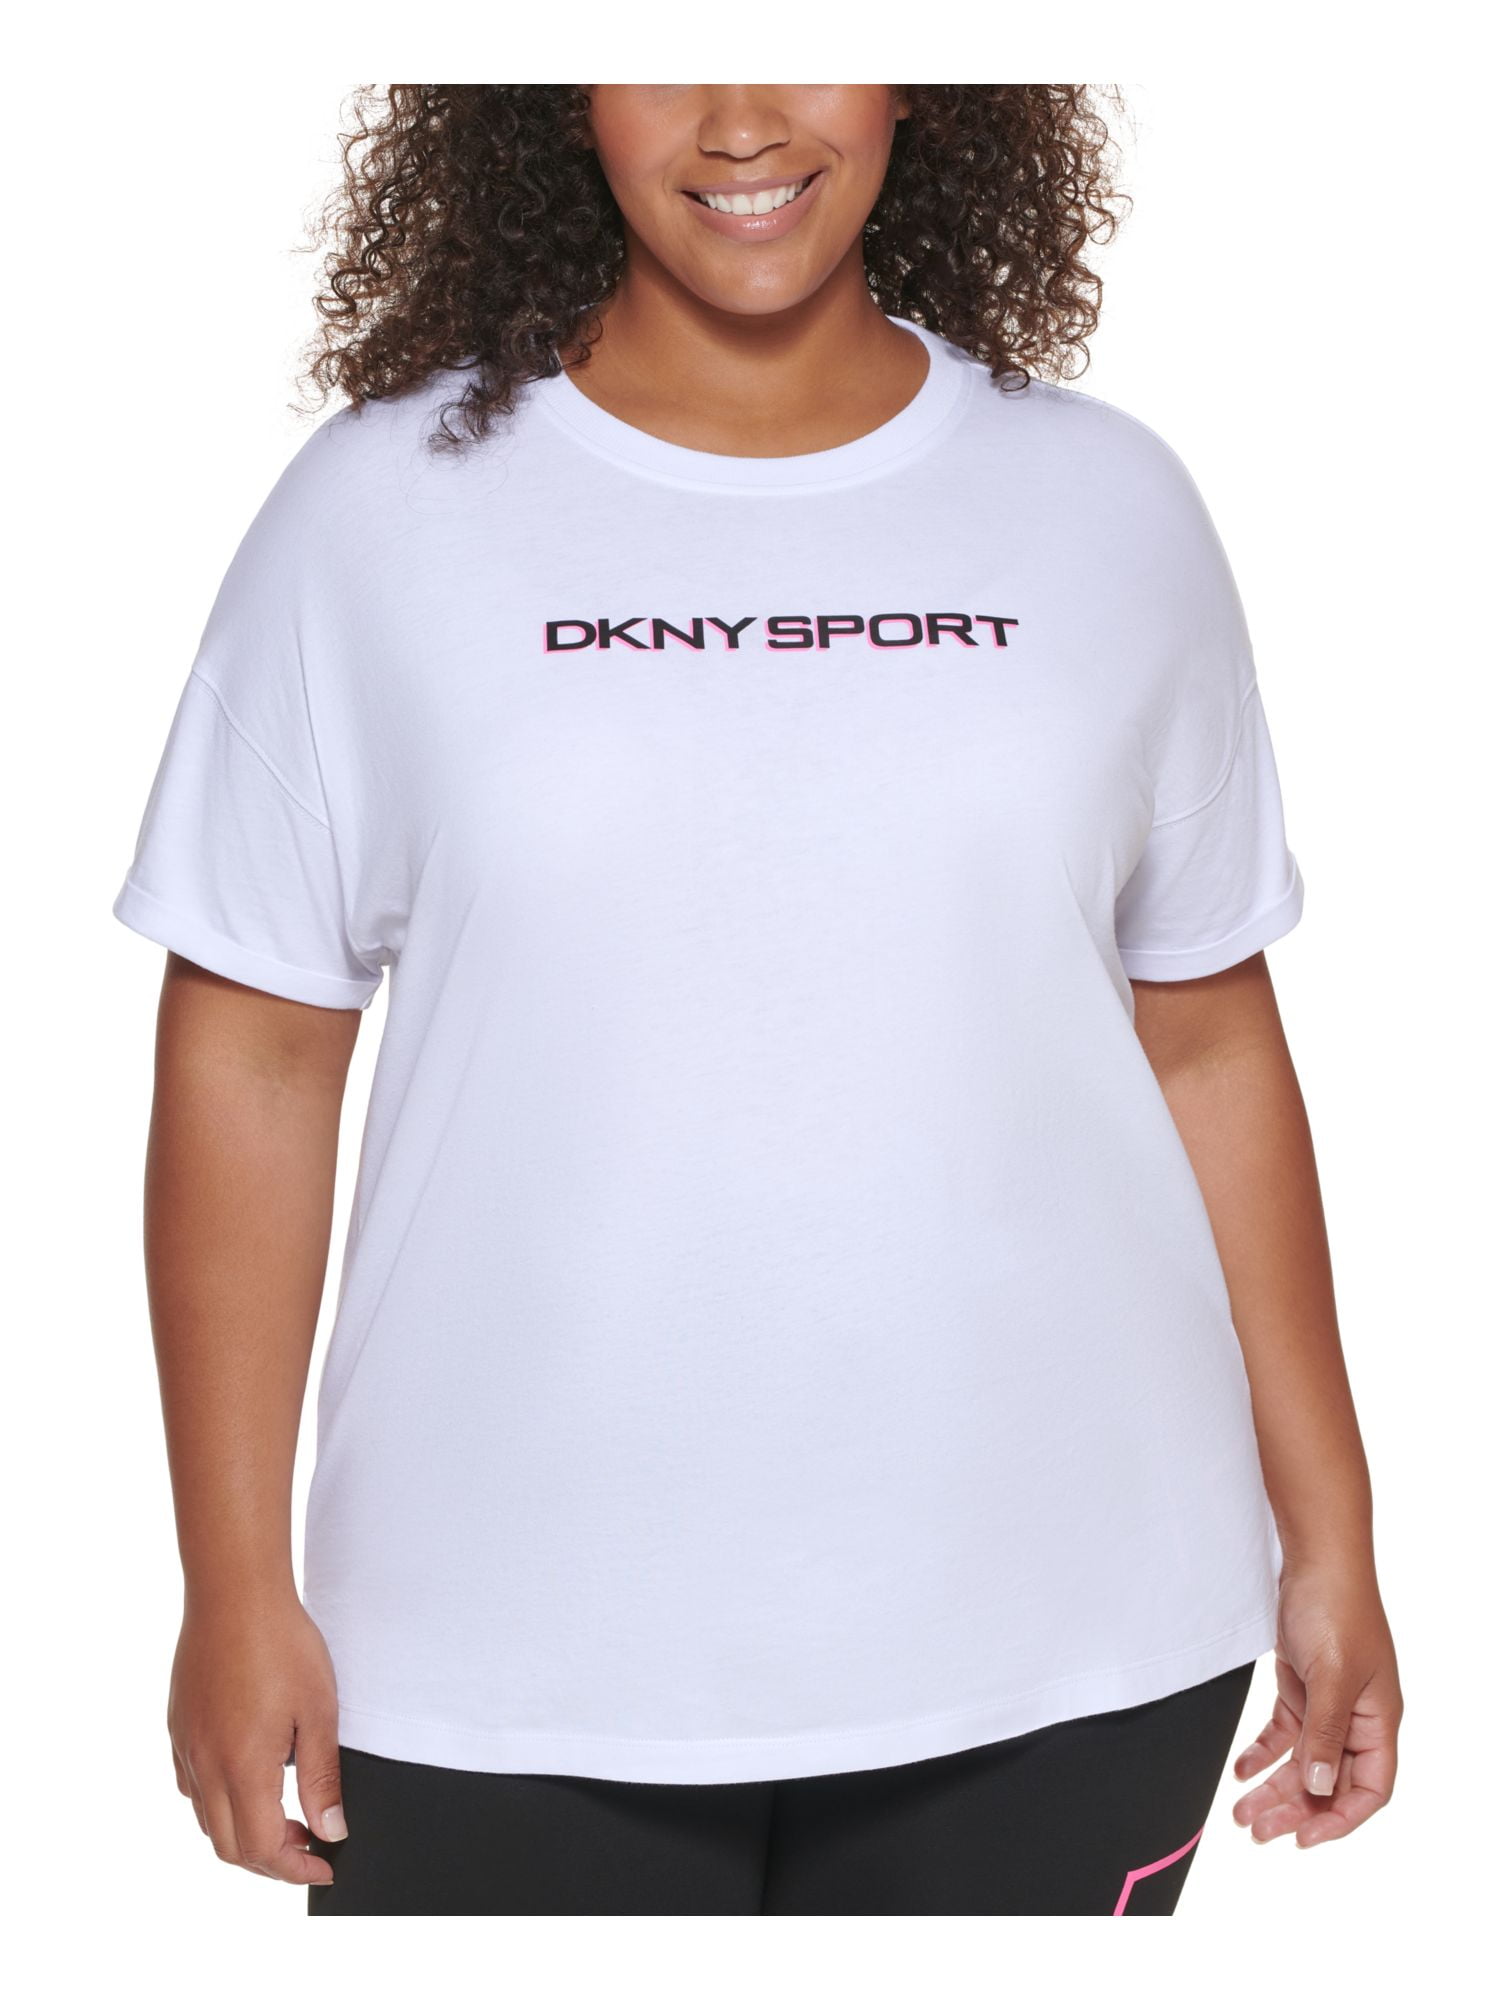 DKNY SPORT Womens Stretch Slitted Logo Graphic Short Sleeve Crew Neck Top 3X - Walmart.com